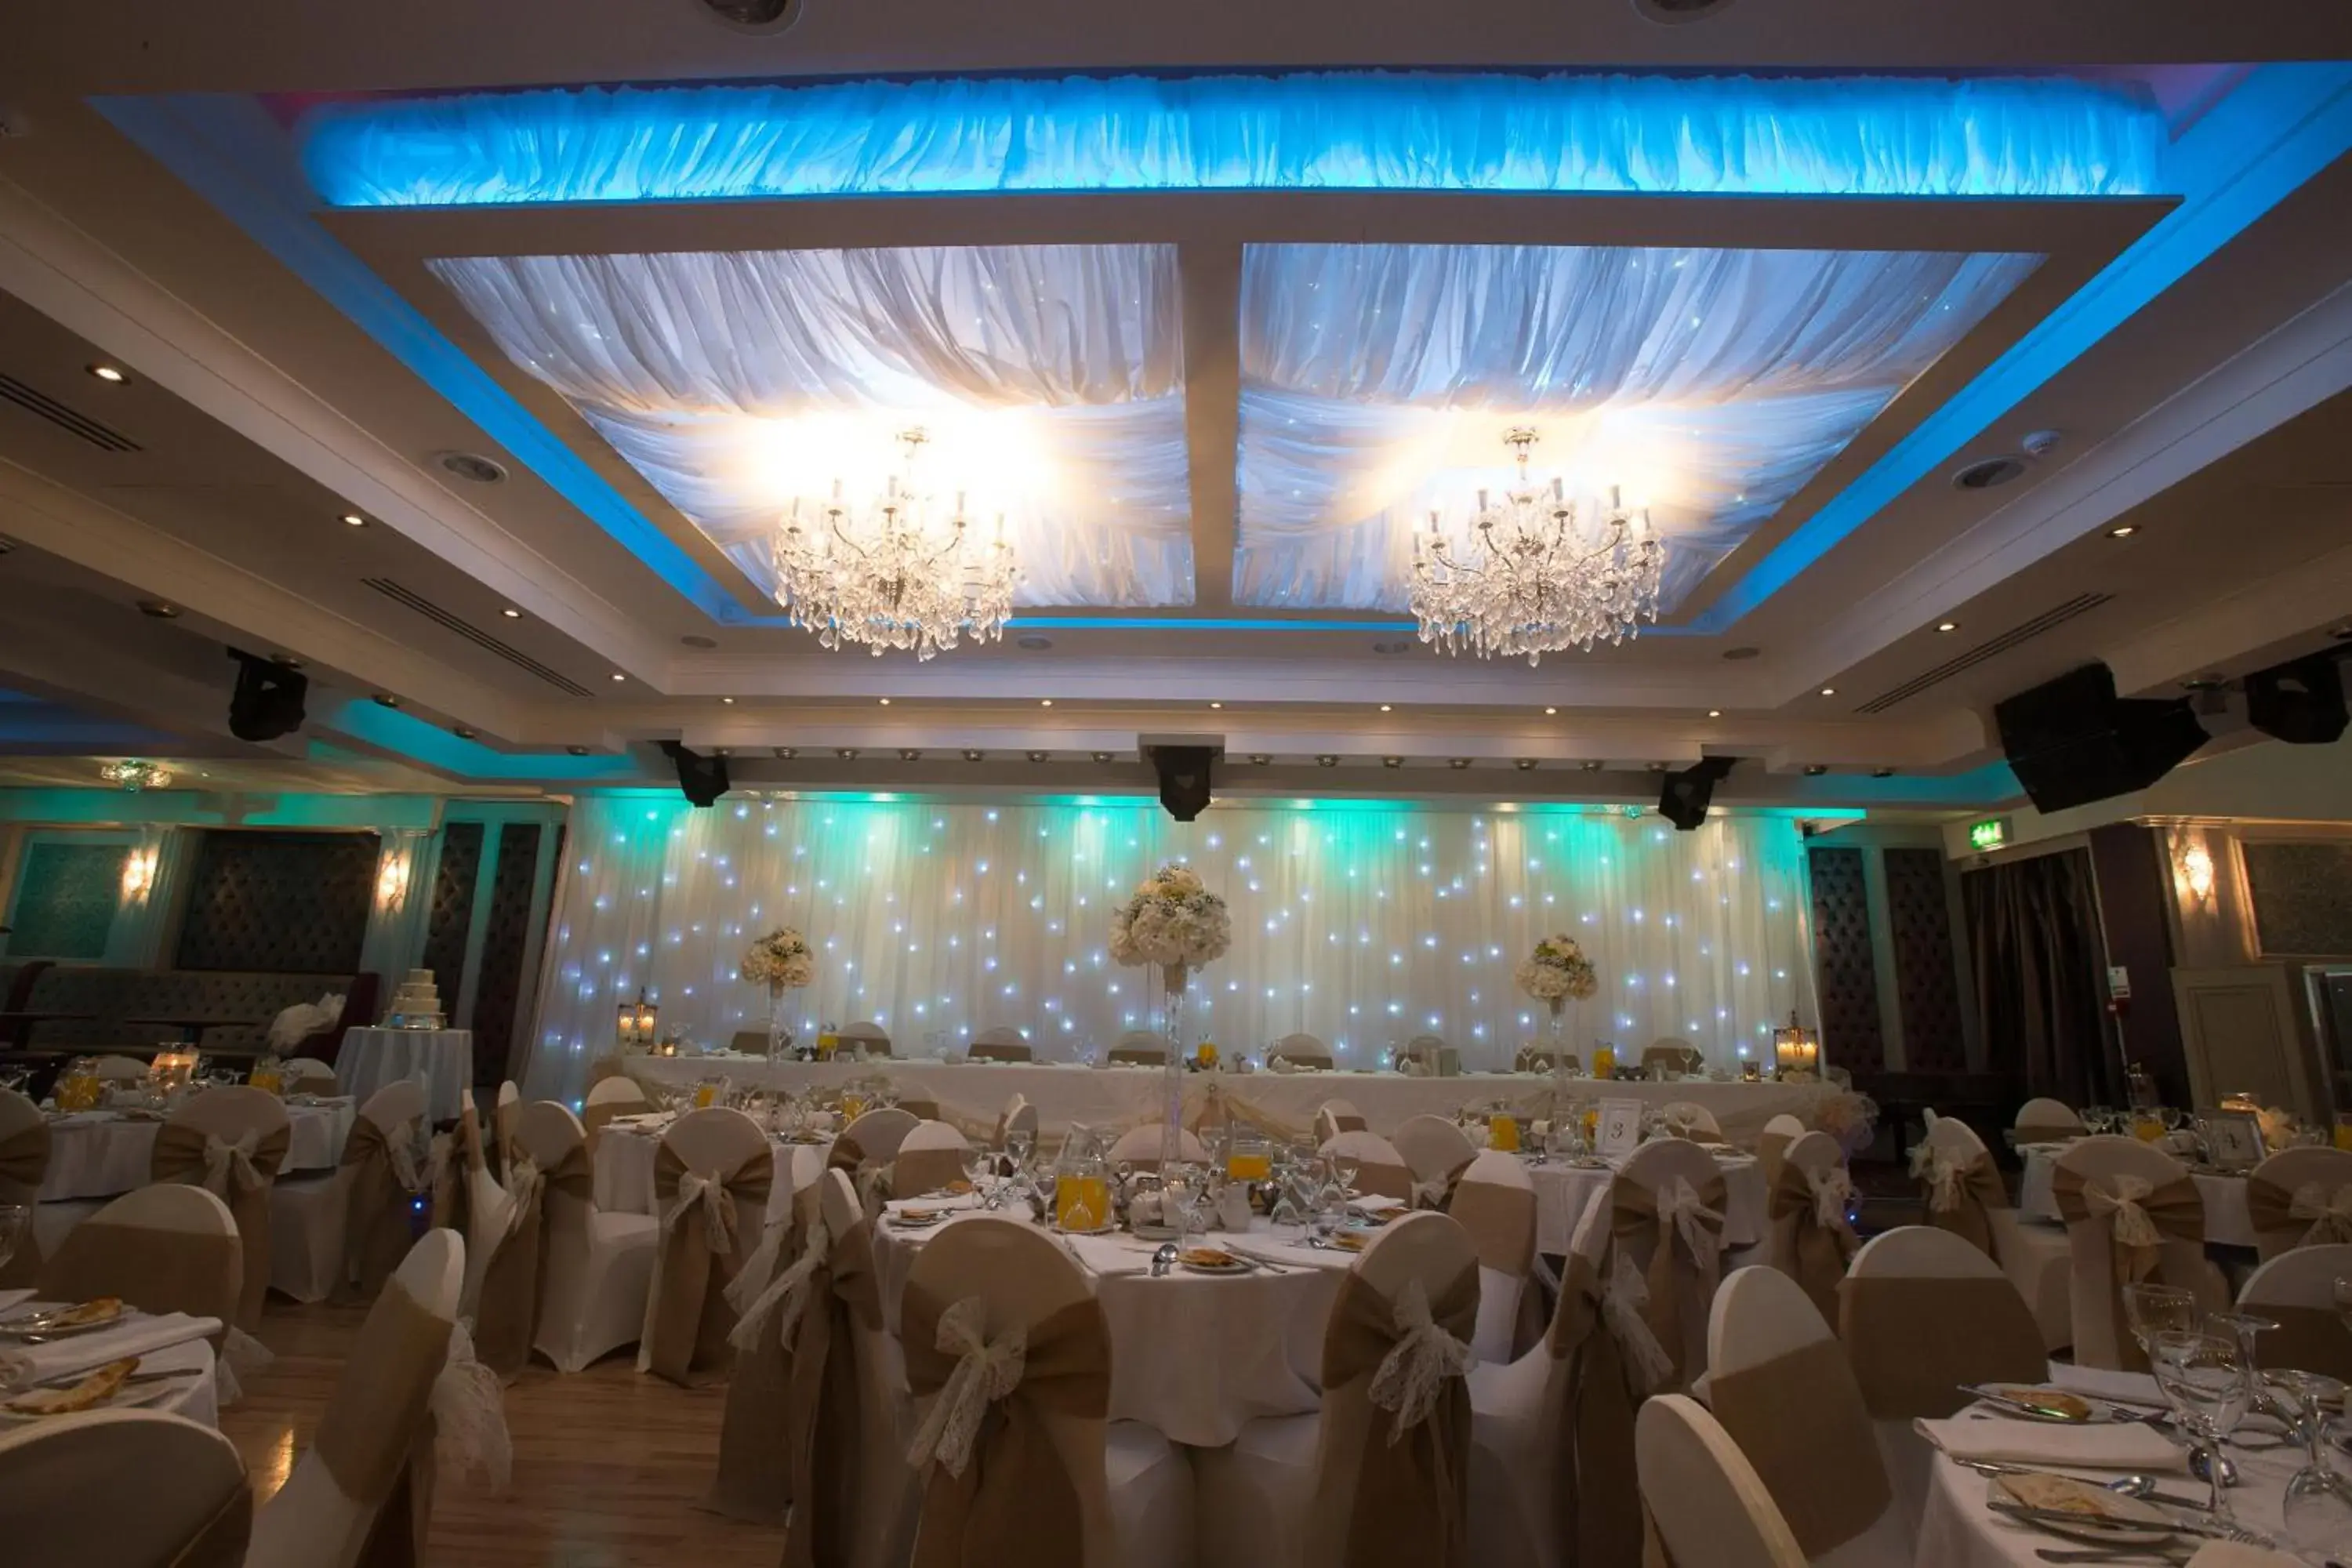 Banquet/Function facilities, Banquet Facilities in Greenvale Hotel